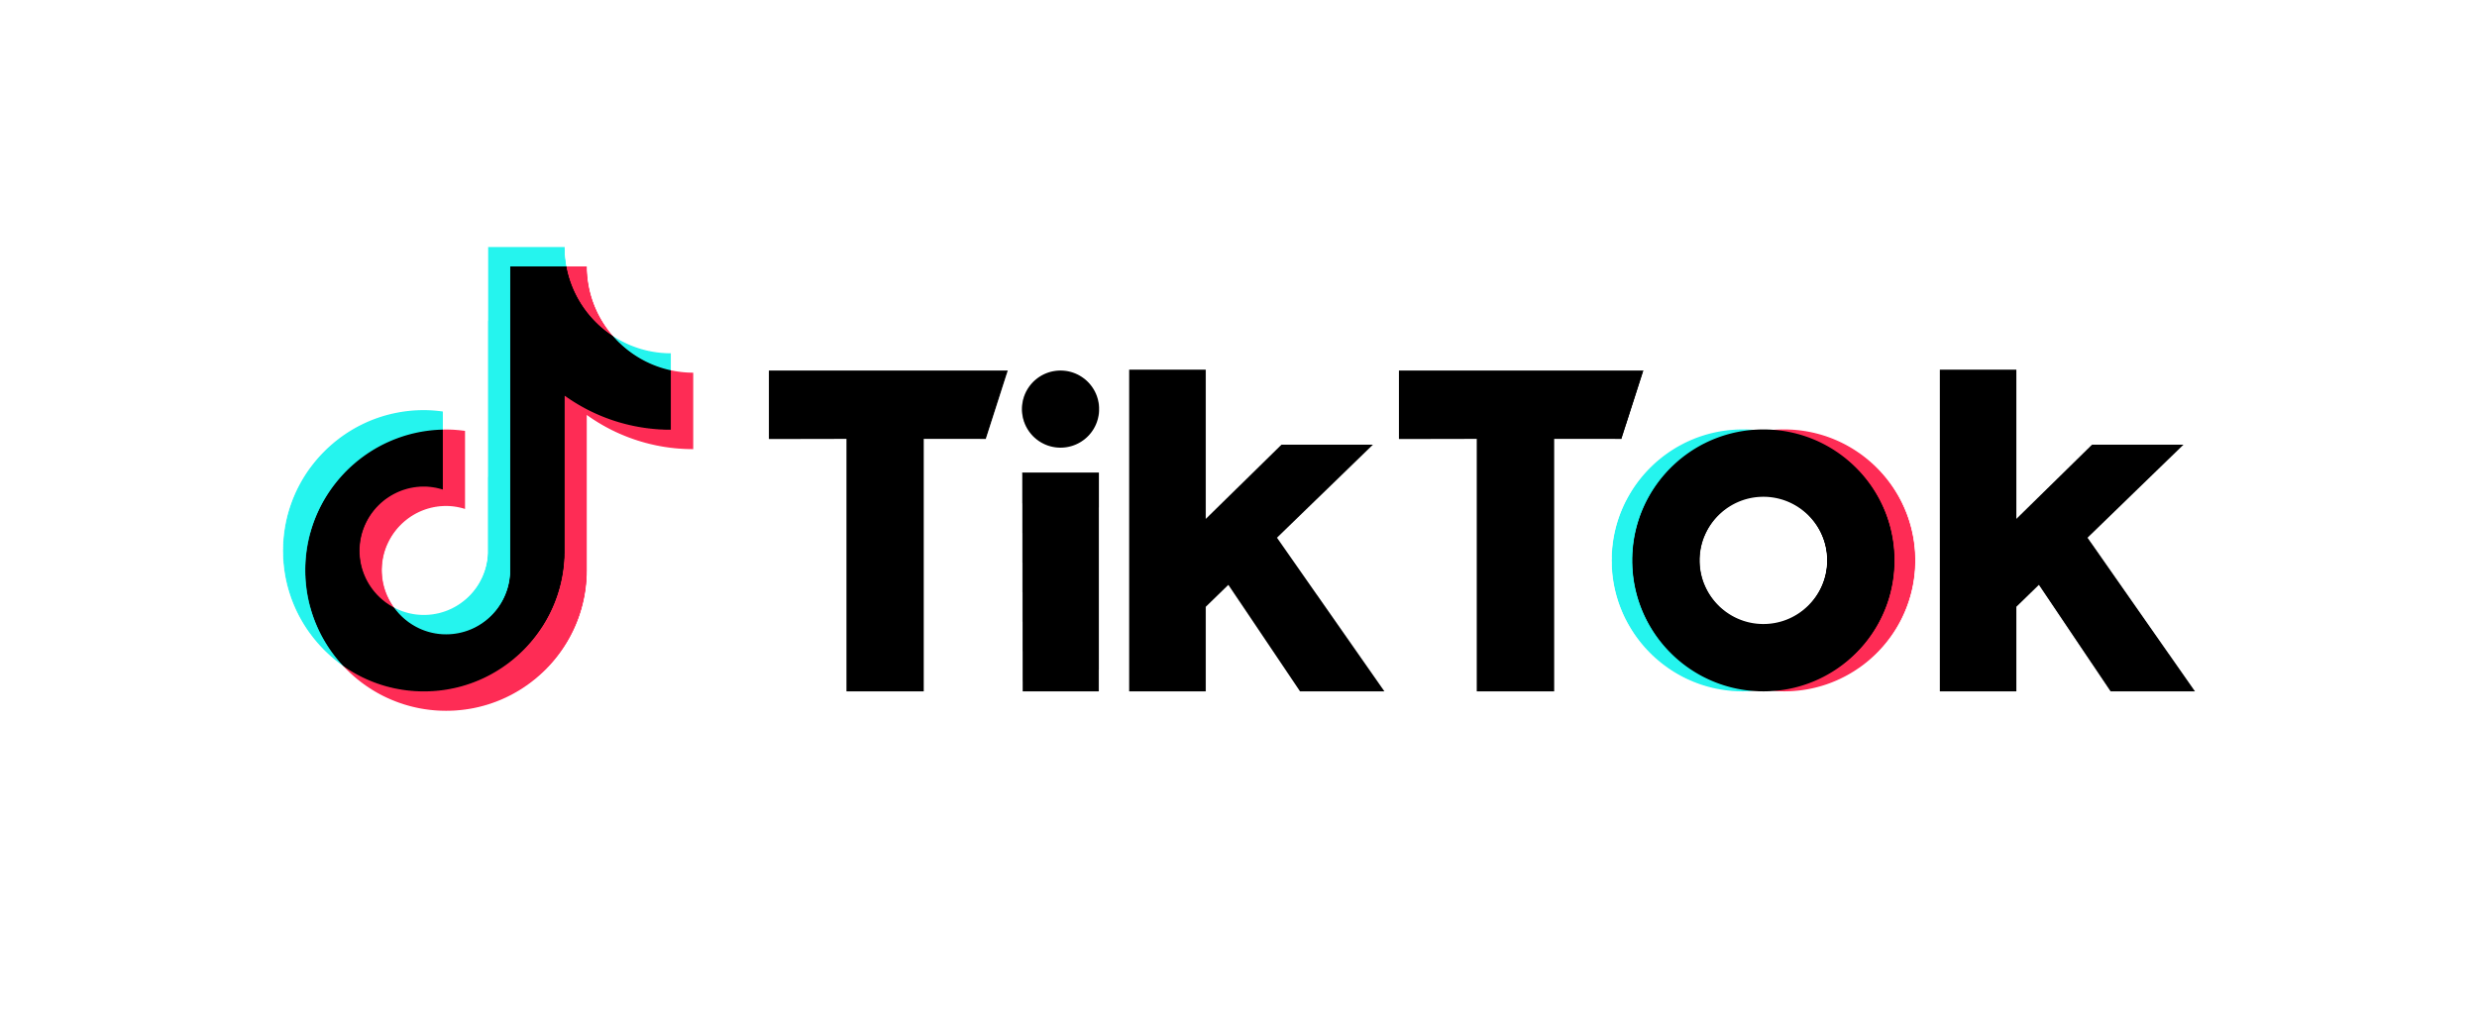 Tiktok logo rgb horizontal black